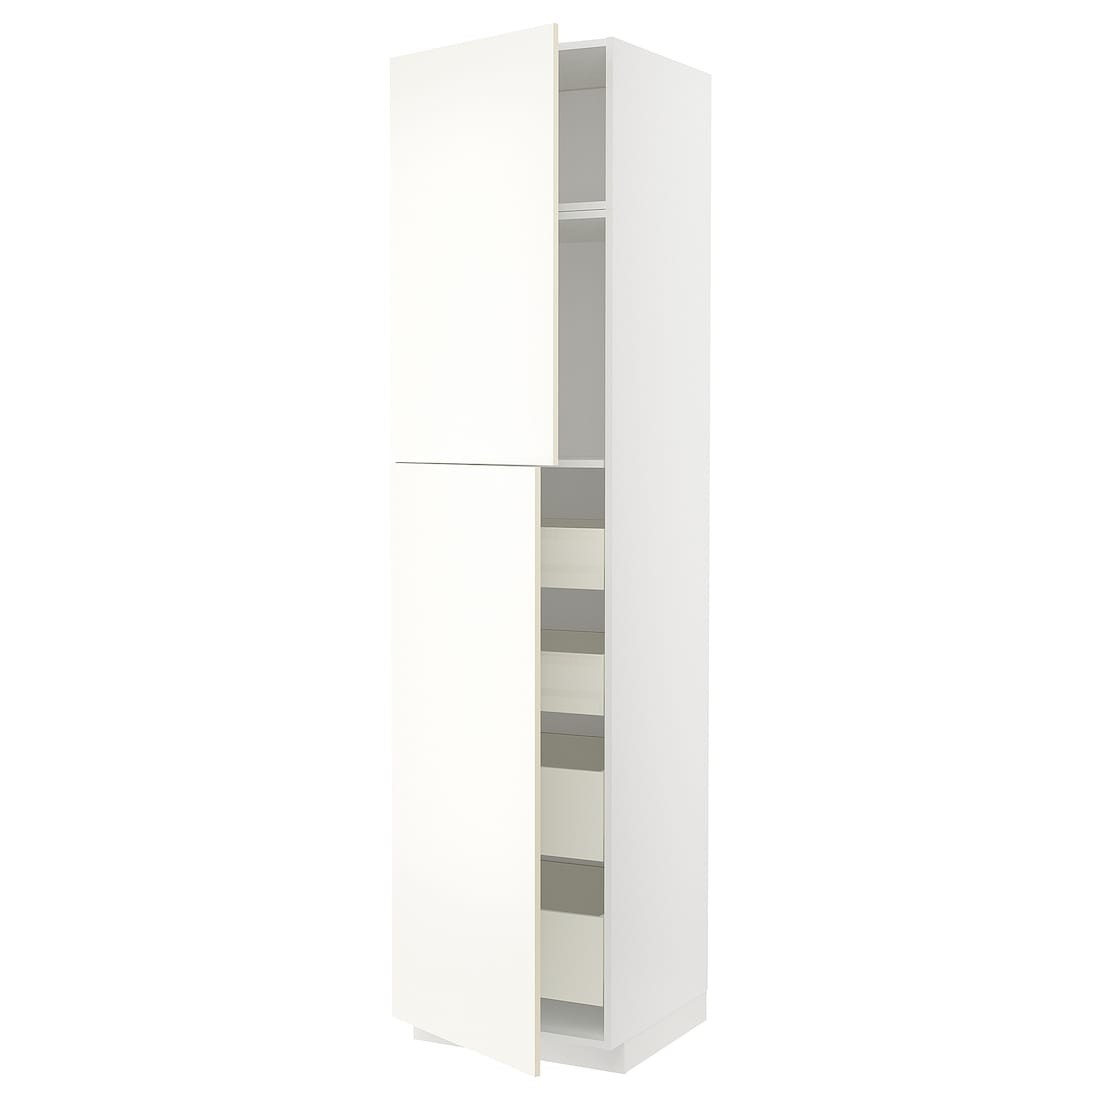 IKEA METOD МЕТОД / MAXIMERA МАКСИМЕРА Шкаф высокий 2 двери / 4 ящика, белый / Vallstena белый 79507416 | 795.074.16